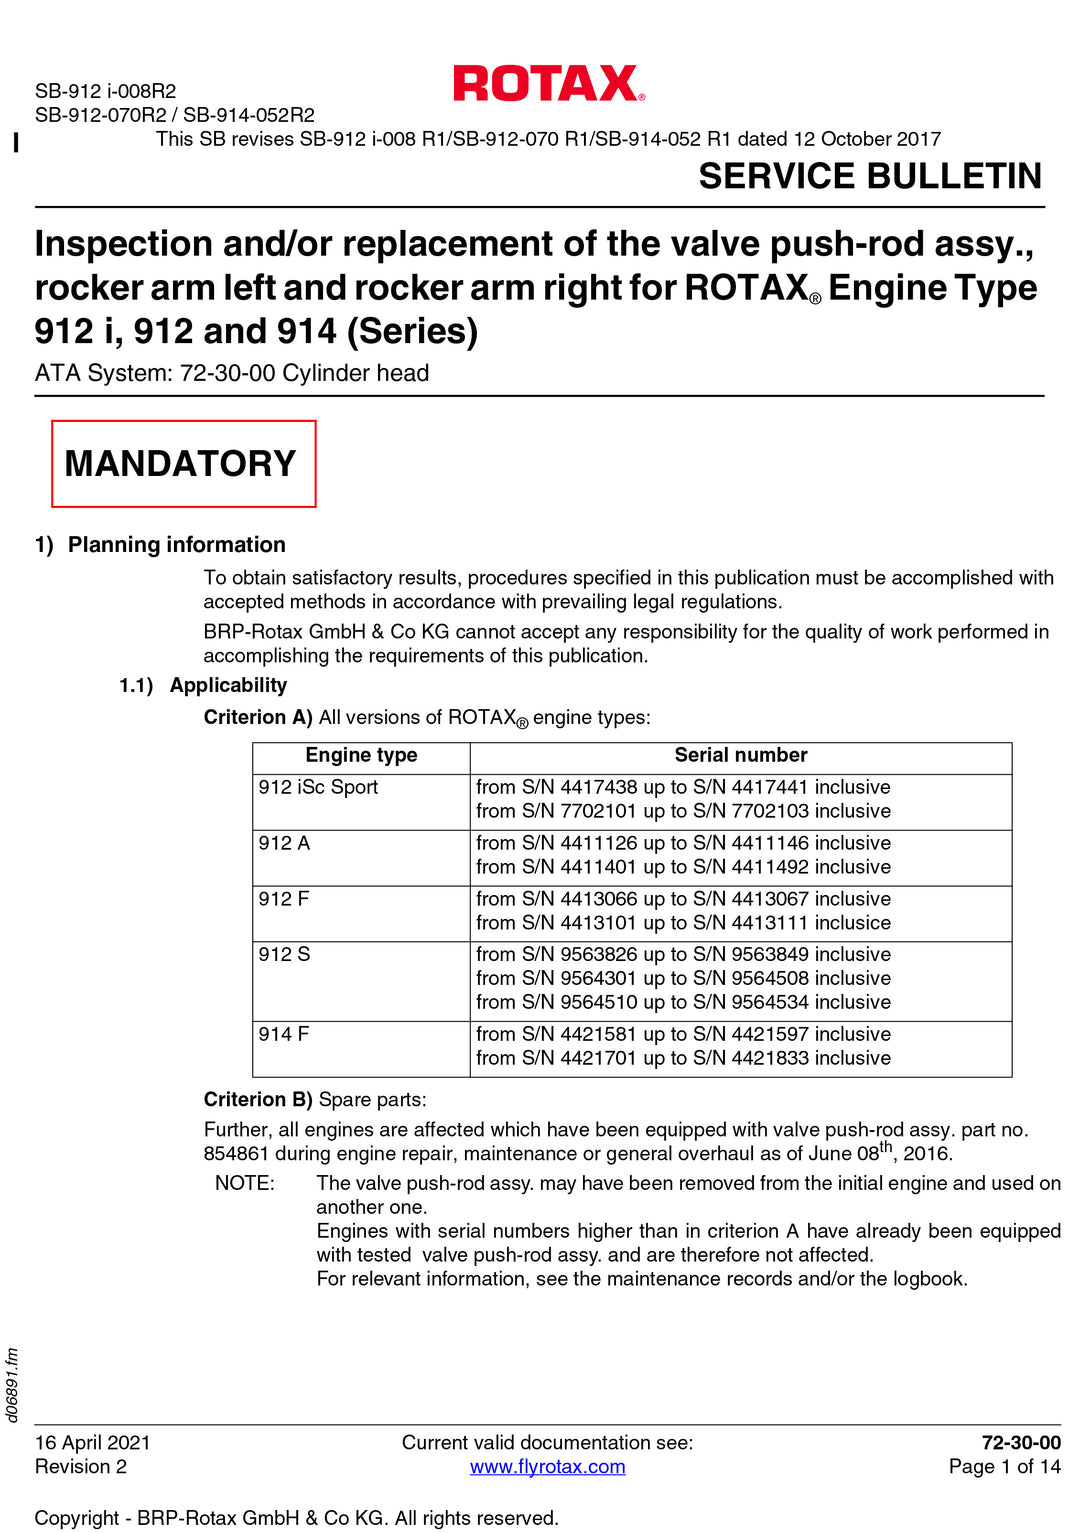 Rotax Service Bulletin Push Rod Replacement